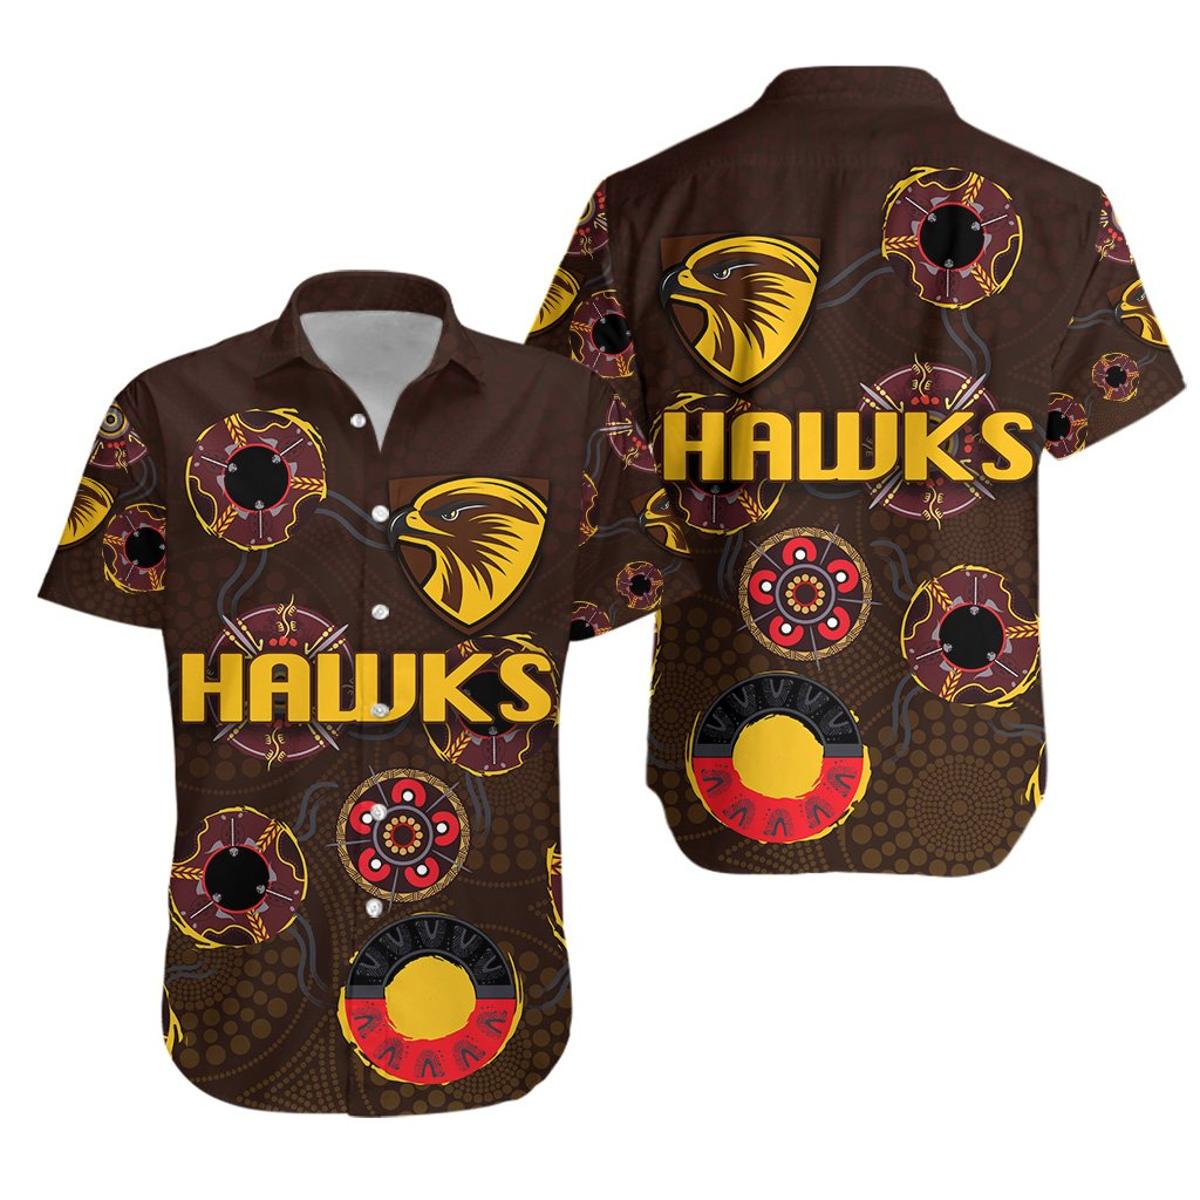 North Melbourne Kangaroos Football Team Since 1869 Vintage Aloha Shirt Gift For Afl Fans